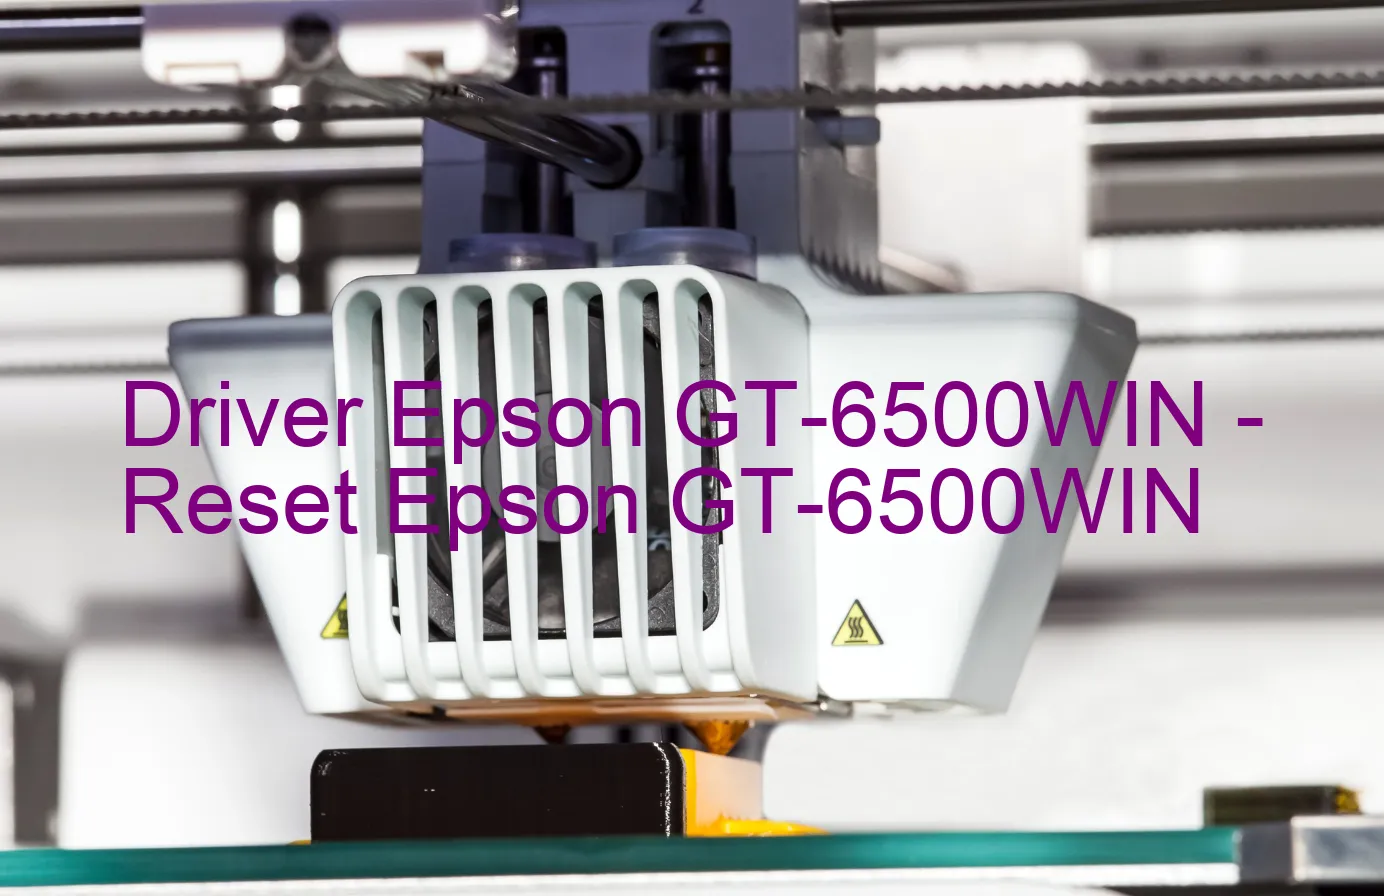 Epson GT-6500WINのドライバー、Epson GT-6500WINのリセットソフトウェア